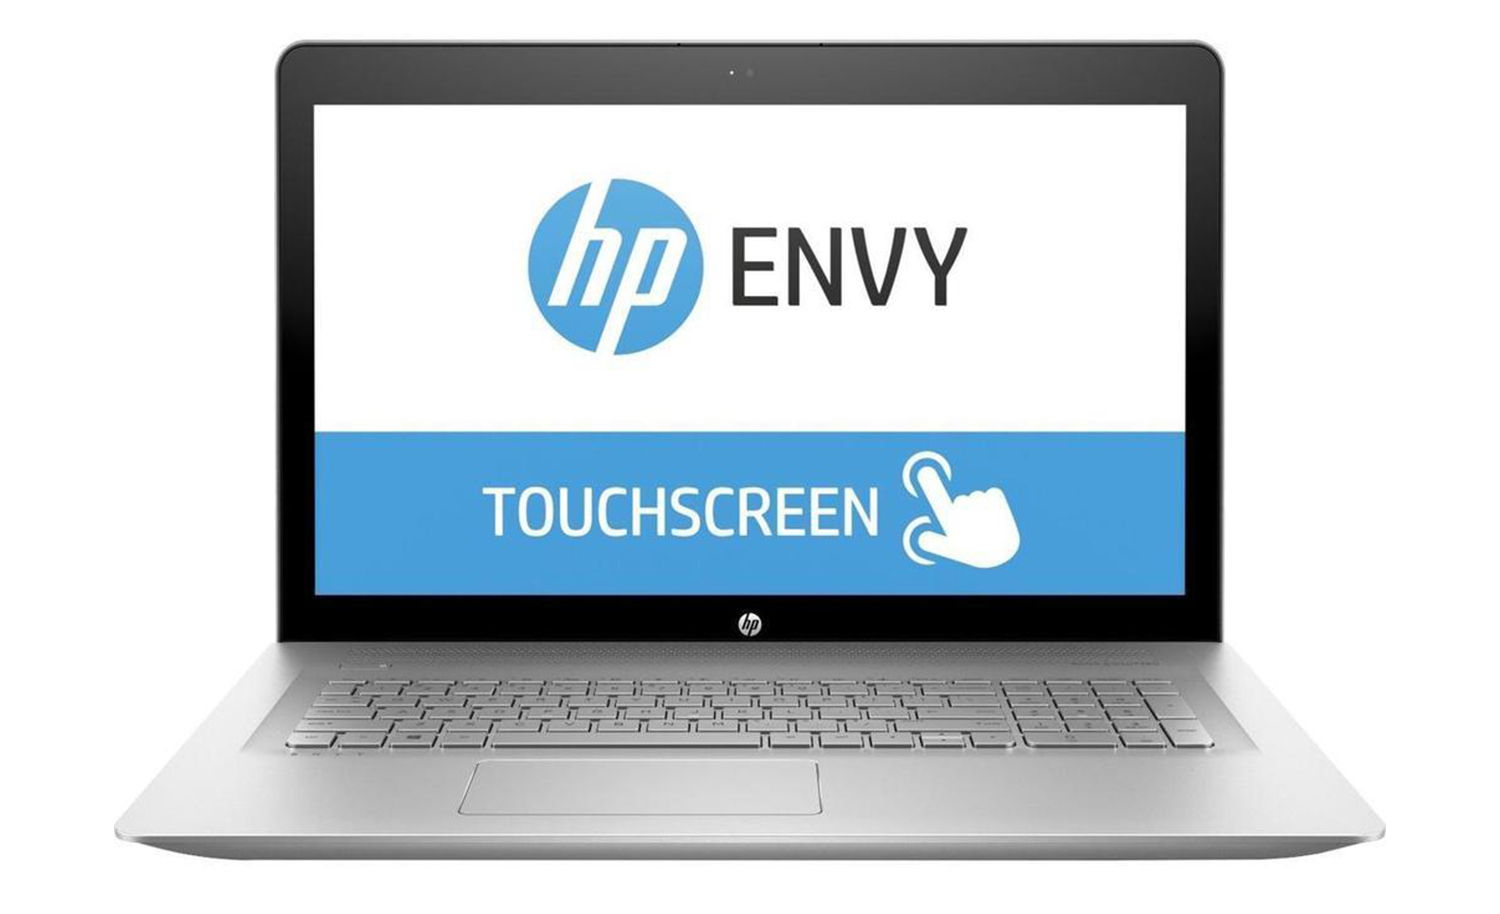 HP Envy m7 Notebook Intel Core i7 7th Gen 16GB RAM 256GB SSD Touchscreen Windows 10 Home Nvidia GeForce 940MX